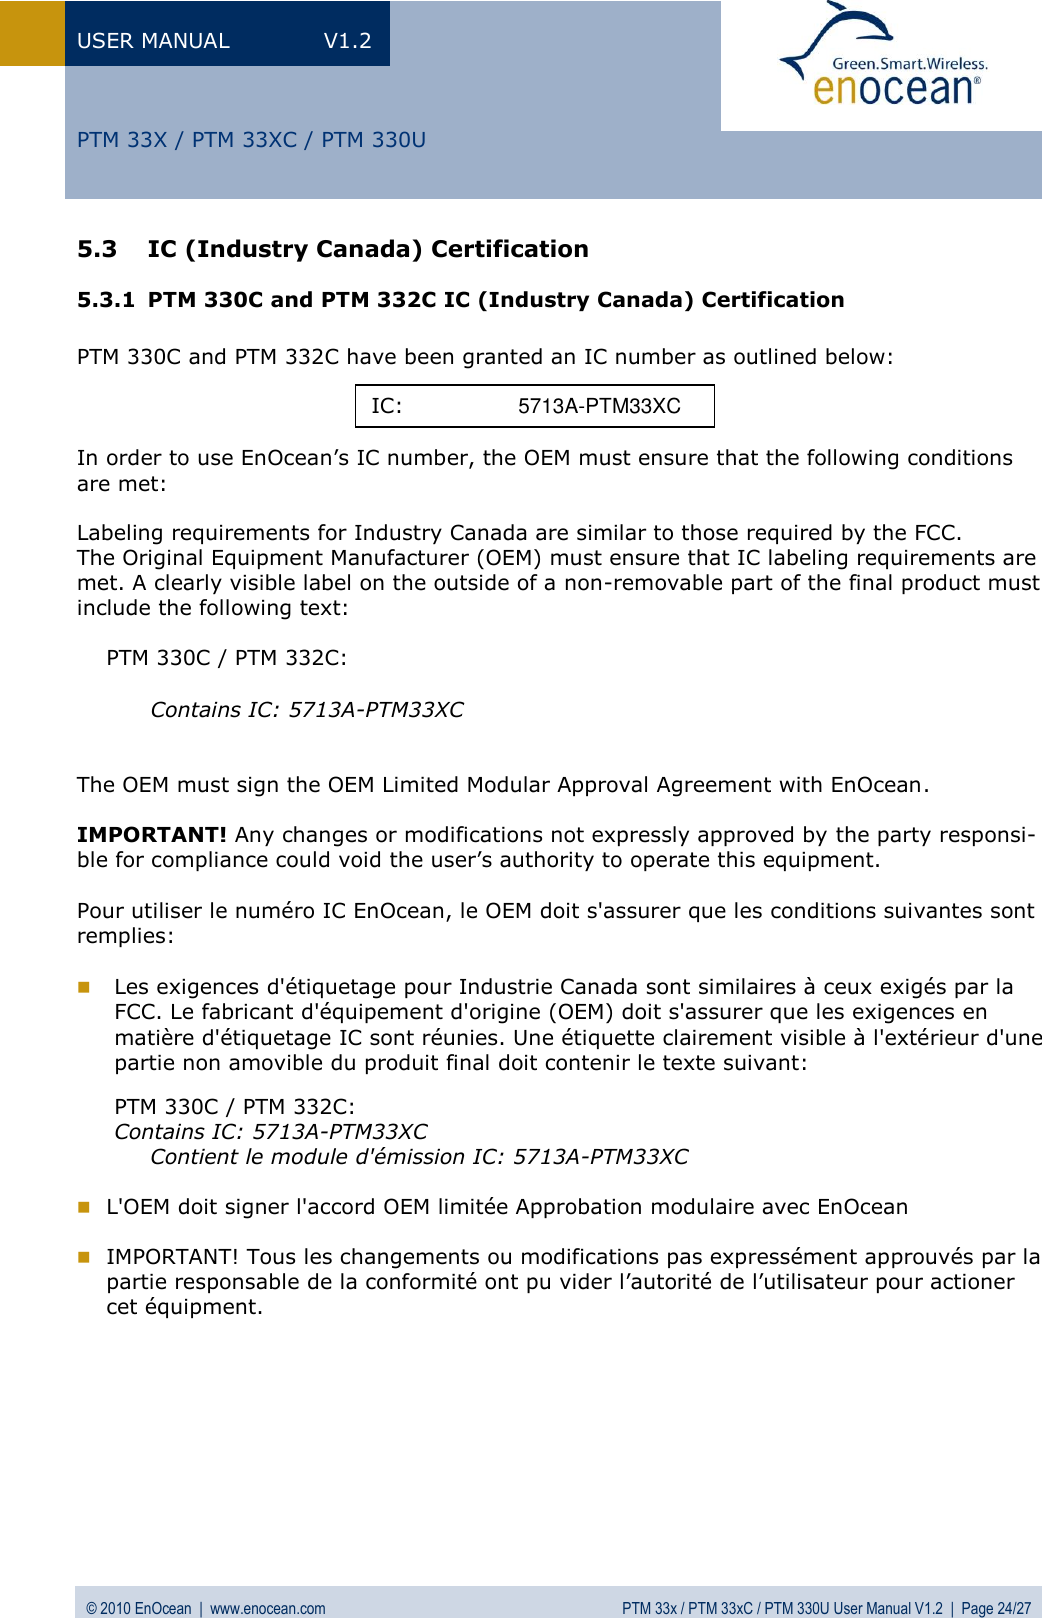 USER MANUAL  V1.2 © 2010 EnOcean  |  www.enocean.com  PTM 33x / PTM 33xC / PTM 330U User Manual V1.2  |  Page 24/27   PTM 33X / PTM 33XC / PTM 330U 5.3 IC (Industry Canada) Certification 5.3.1 PTM 330C and PTM 332C IC (Industry Canada) Certification  PTM 330C and PTM 332C have been granted an IC number as outlined below:    In order to use EnOcean’s IC number, the OEM must ensure that the following conditions are met:  Labeling requirements for Industry Canada are similar to those required by the FCC. The Original Equipment Manufacturer (OEM) must ensure that IC labeling requirements are met. A clearly visible label on the outside of a non-removable part of the final product must include the following text:  PTM 330C / PTM 332C:  Contains IC: 5713A-PTM33XC    The OEM must sign the OEM Limited Modular Approval Agreement with EnOcean.  IMPORTANT! Any changes or modifications not expressly approved by the party responsi-ble for compliance could void the user’s authority to operate this equipment.   Pour utiliser le numéro IC EnOcean, le OEM doit s&apos;assurer que les conditions suivantes sont remplies:   Les exigences d&apos;étiquetage pour Industrie Canada sont similaires à ceux exigés par la FCC. Le fabricant d&apos;équipement d&apos;origine (OEM) doit s&apos;assurer que les exigences en  matière d&apos;étiquetage IC sont réunies. Une étiquette clairement visible à l&apos;extérieur d&apos;une partie non amovible du produit final doit contenir le texte suivant:  PTM 330C / PTM 332C: Contains IC: 5713A-PTM33XC    Contient le module d&apos;émission IC: 5713A-PTM33XC   L&apos;OEM doit signer l&apos;accord OEM limitée Approbation modulaire avec EnOcean   IMPORTANT! Tous les changements ou modifications pas expressément approuvés par la partie responsable de la conformité ont pu vider l’autorité de l’utilisateur pour actioner cet équipment.    IC:    5713A-PTM33XC 